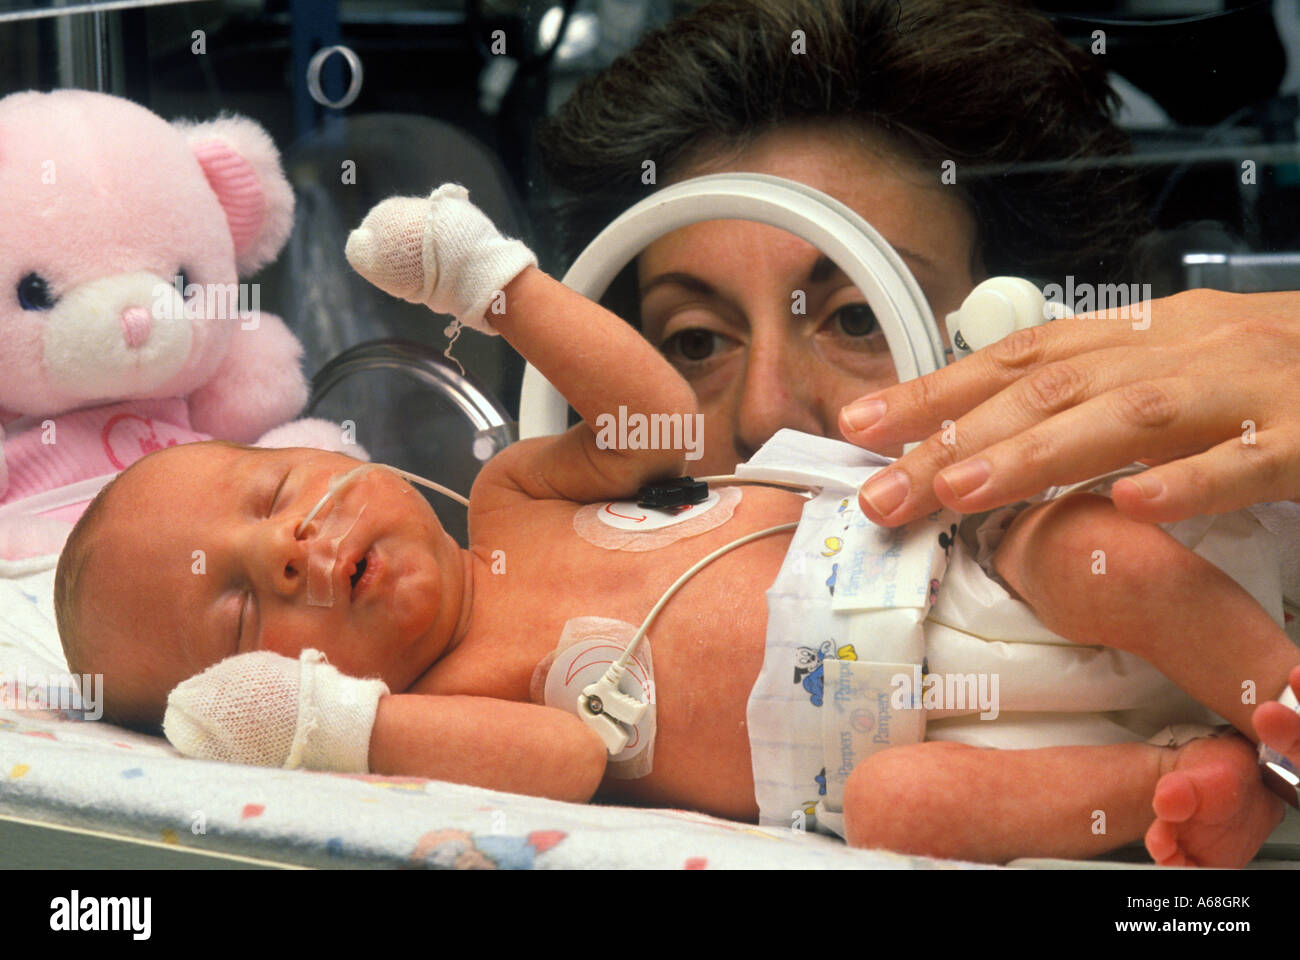 Nurse attends premature infant in an incubator in neonatal intensive care unit NICU Stock Photo